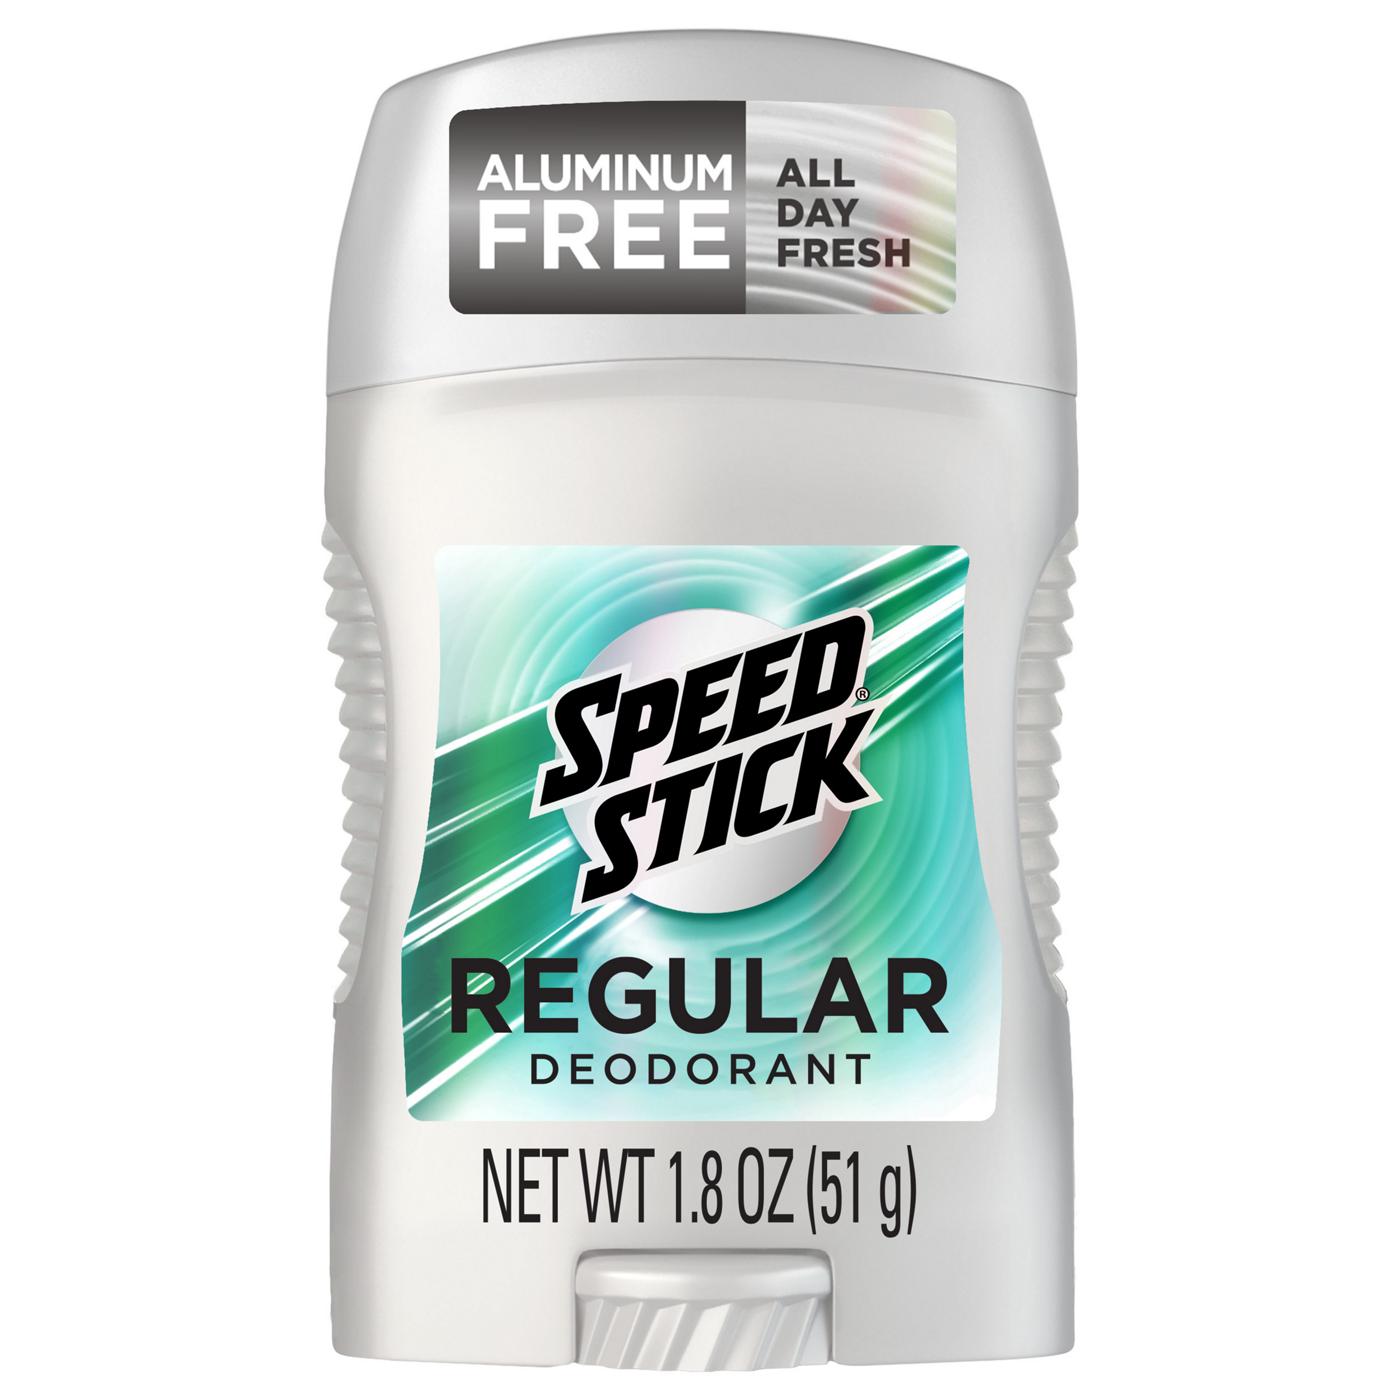 Speed Stick Deodorant - Regular; image 1 of 10